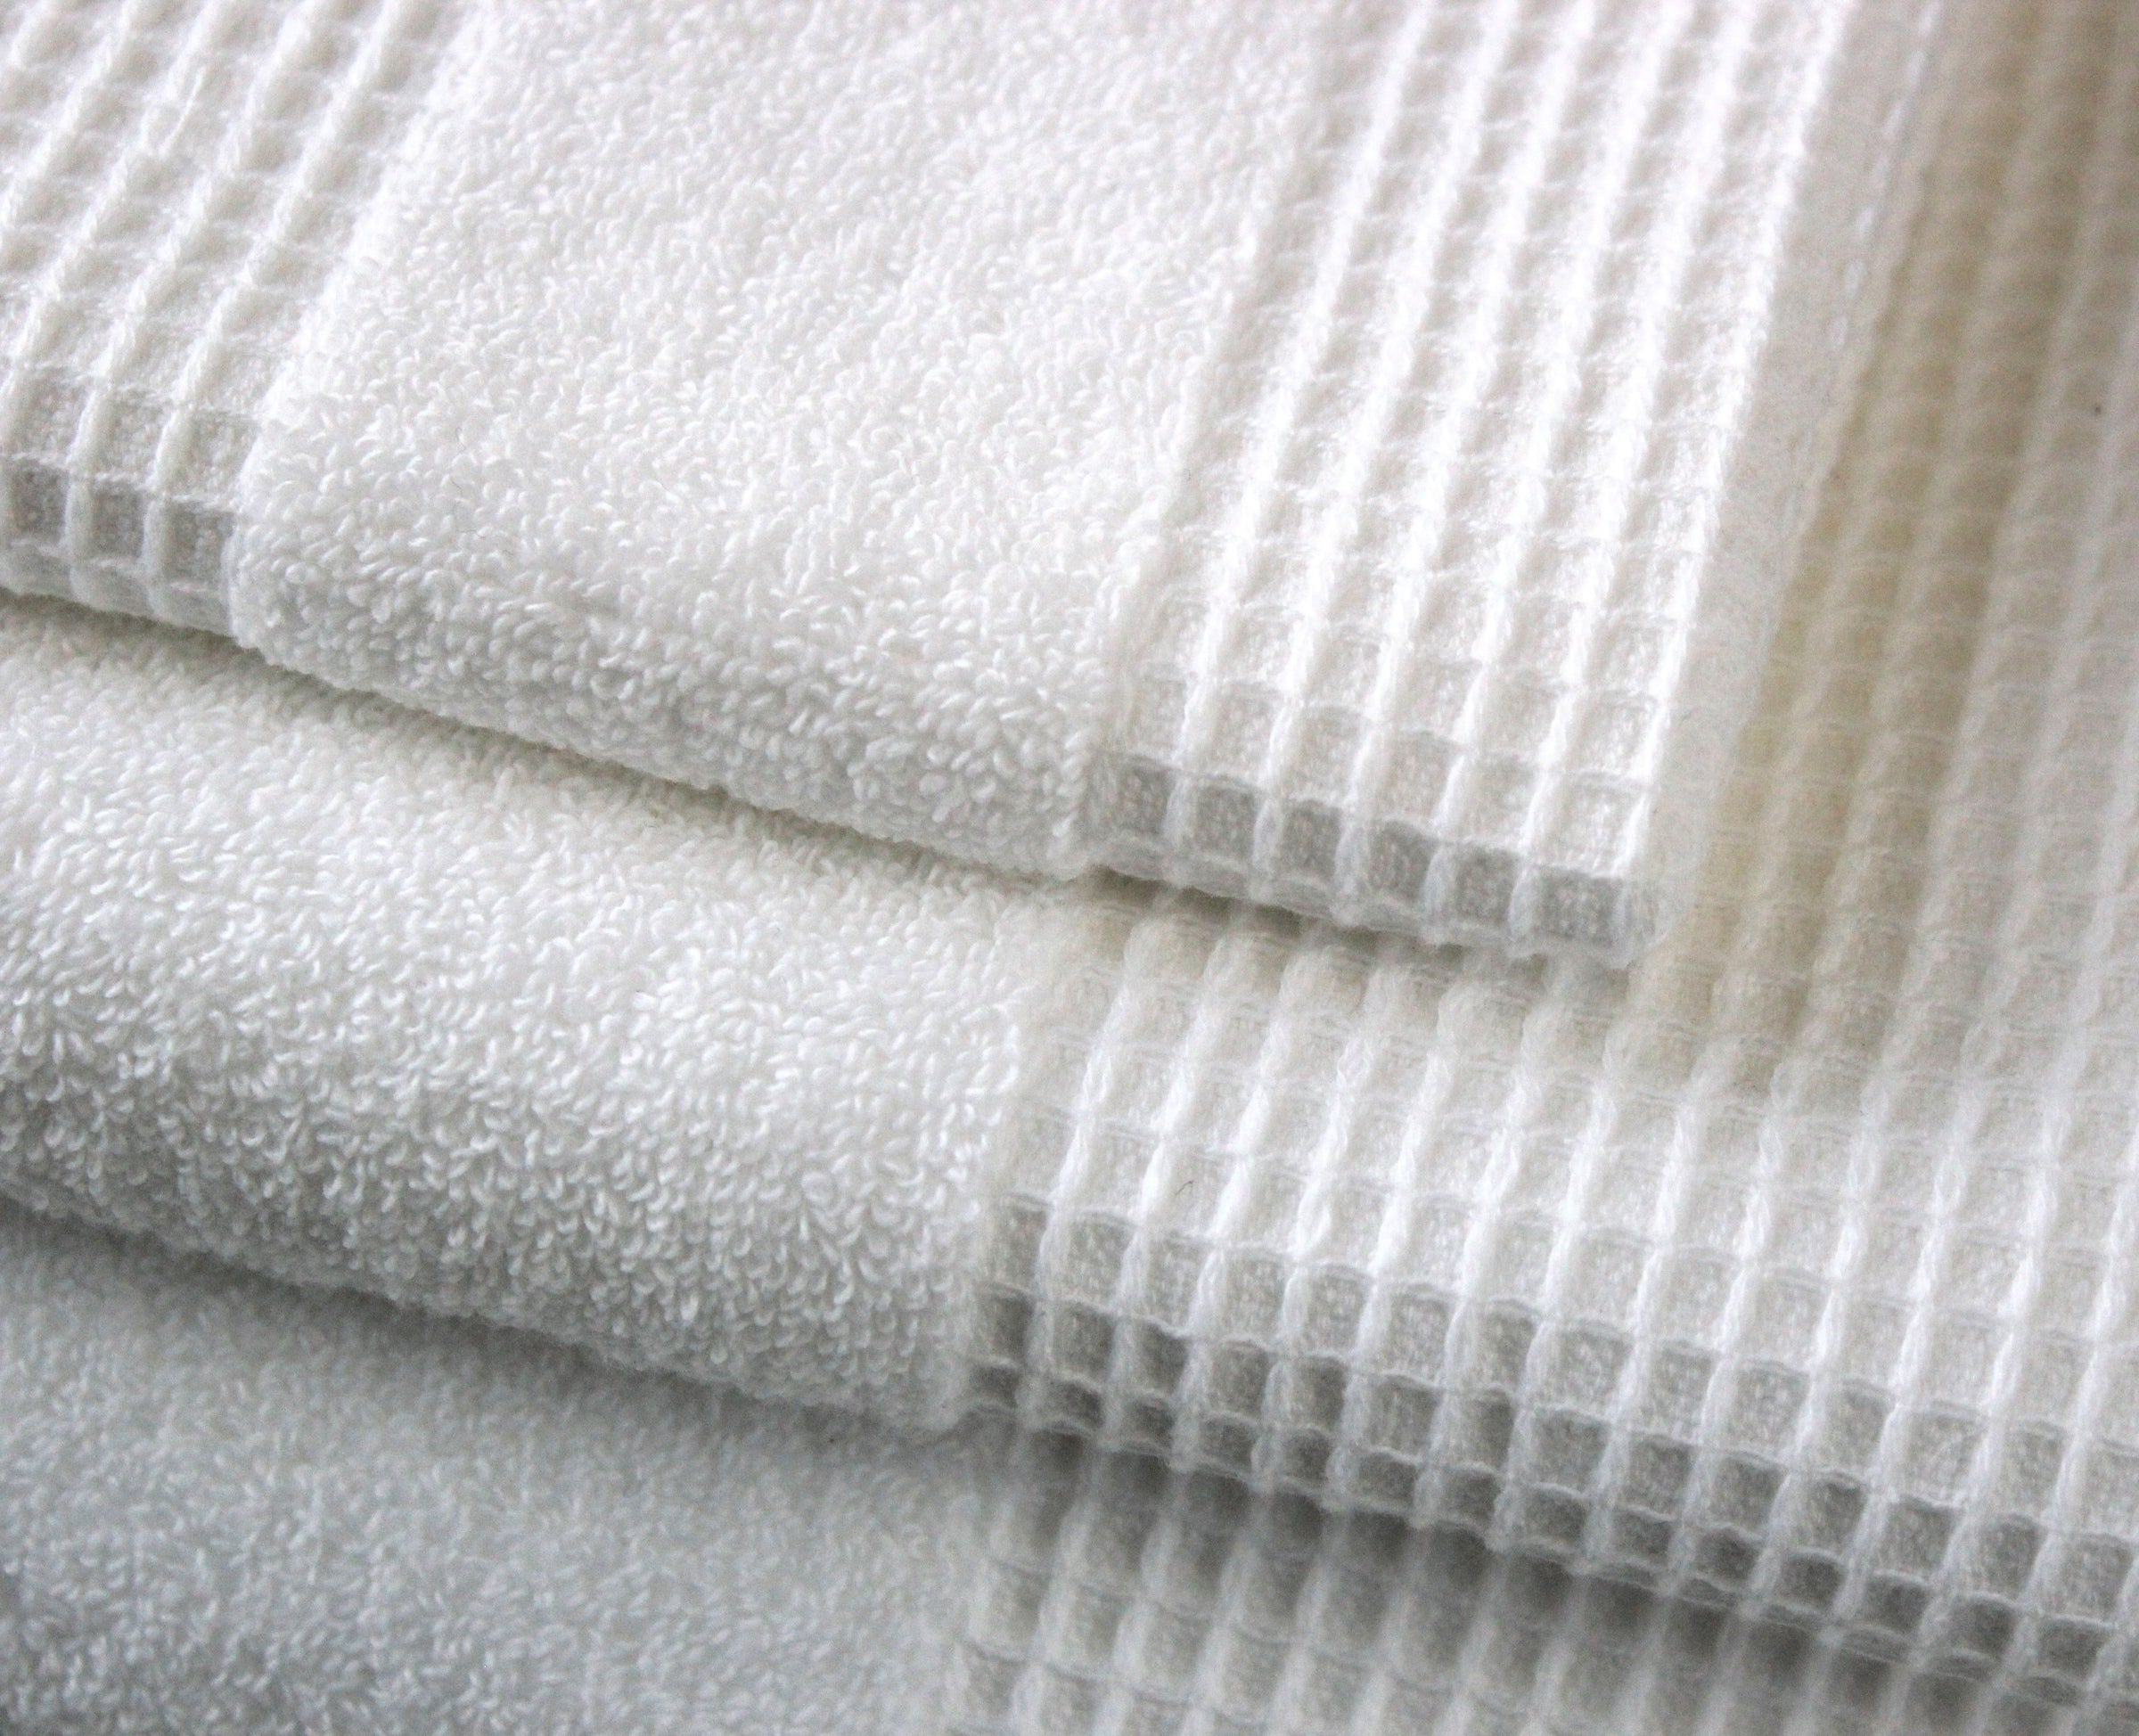 Market & Place 100% Cotton Waffle Weave 6-Piece Hand Towel Set, Light Grey  